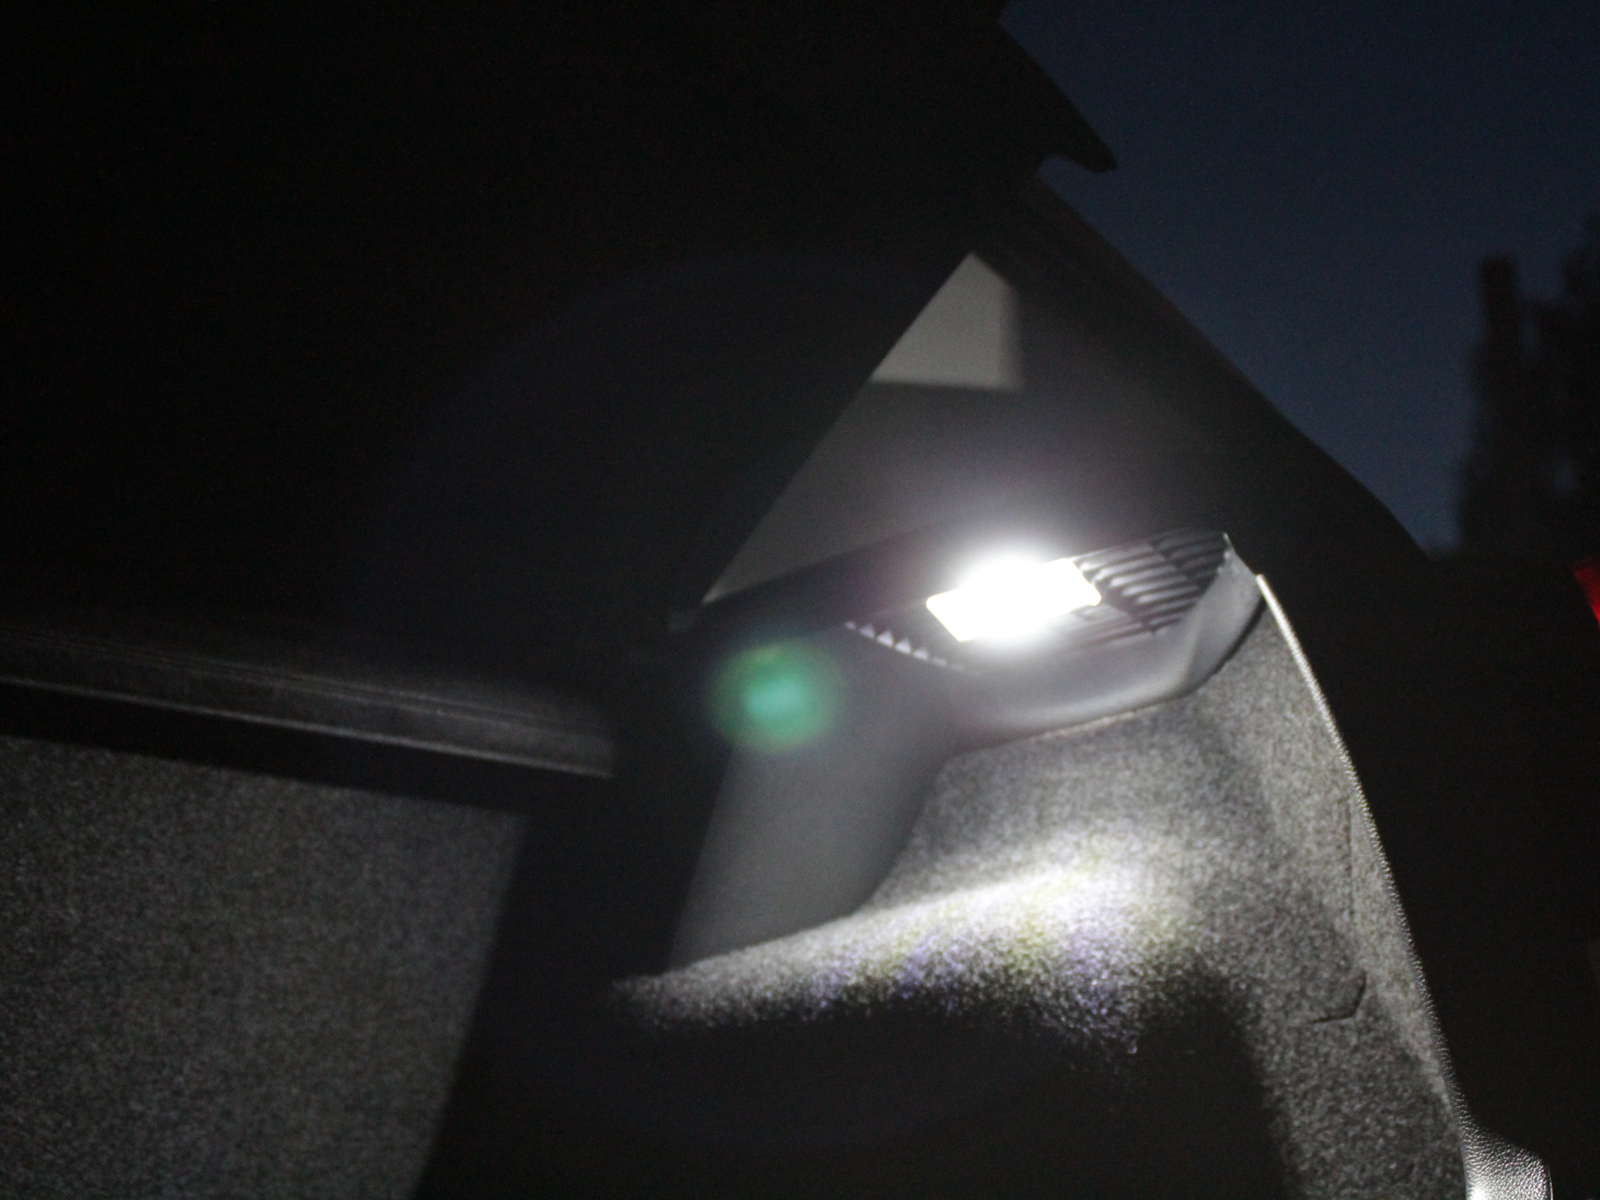 LED Kofferraum Beleuchtung für BMW 1ER F20, F21